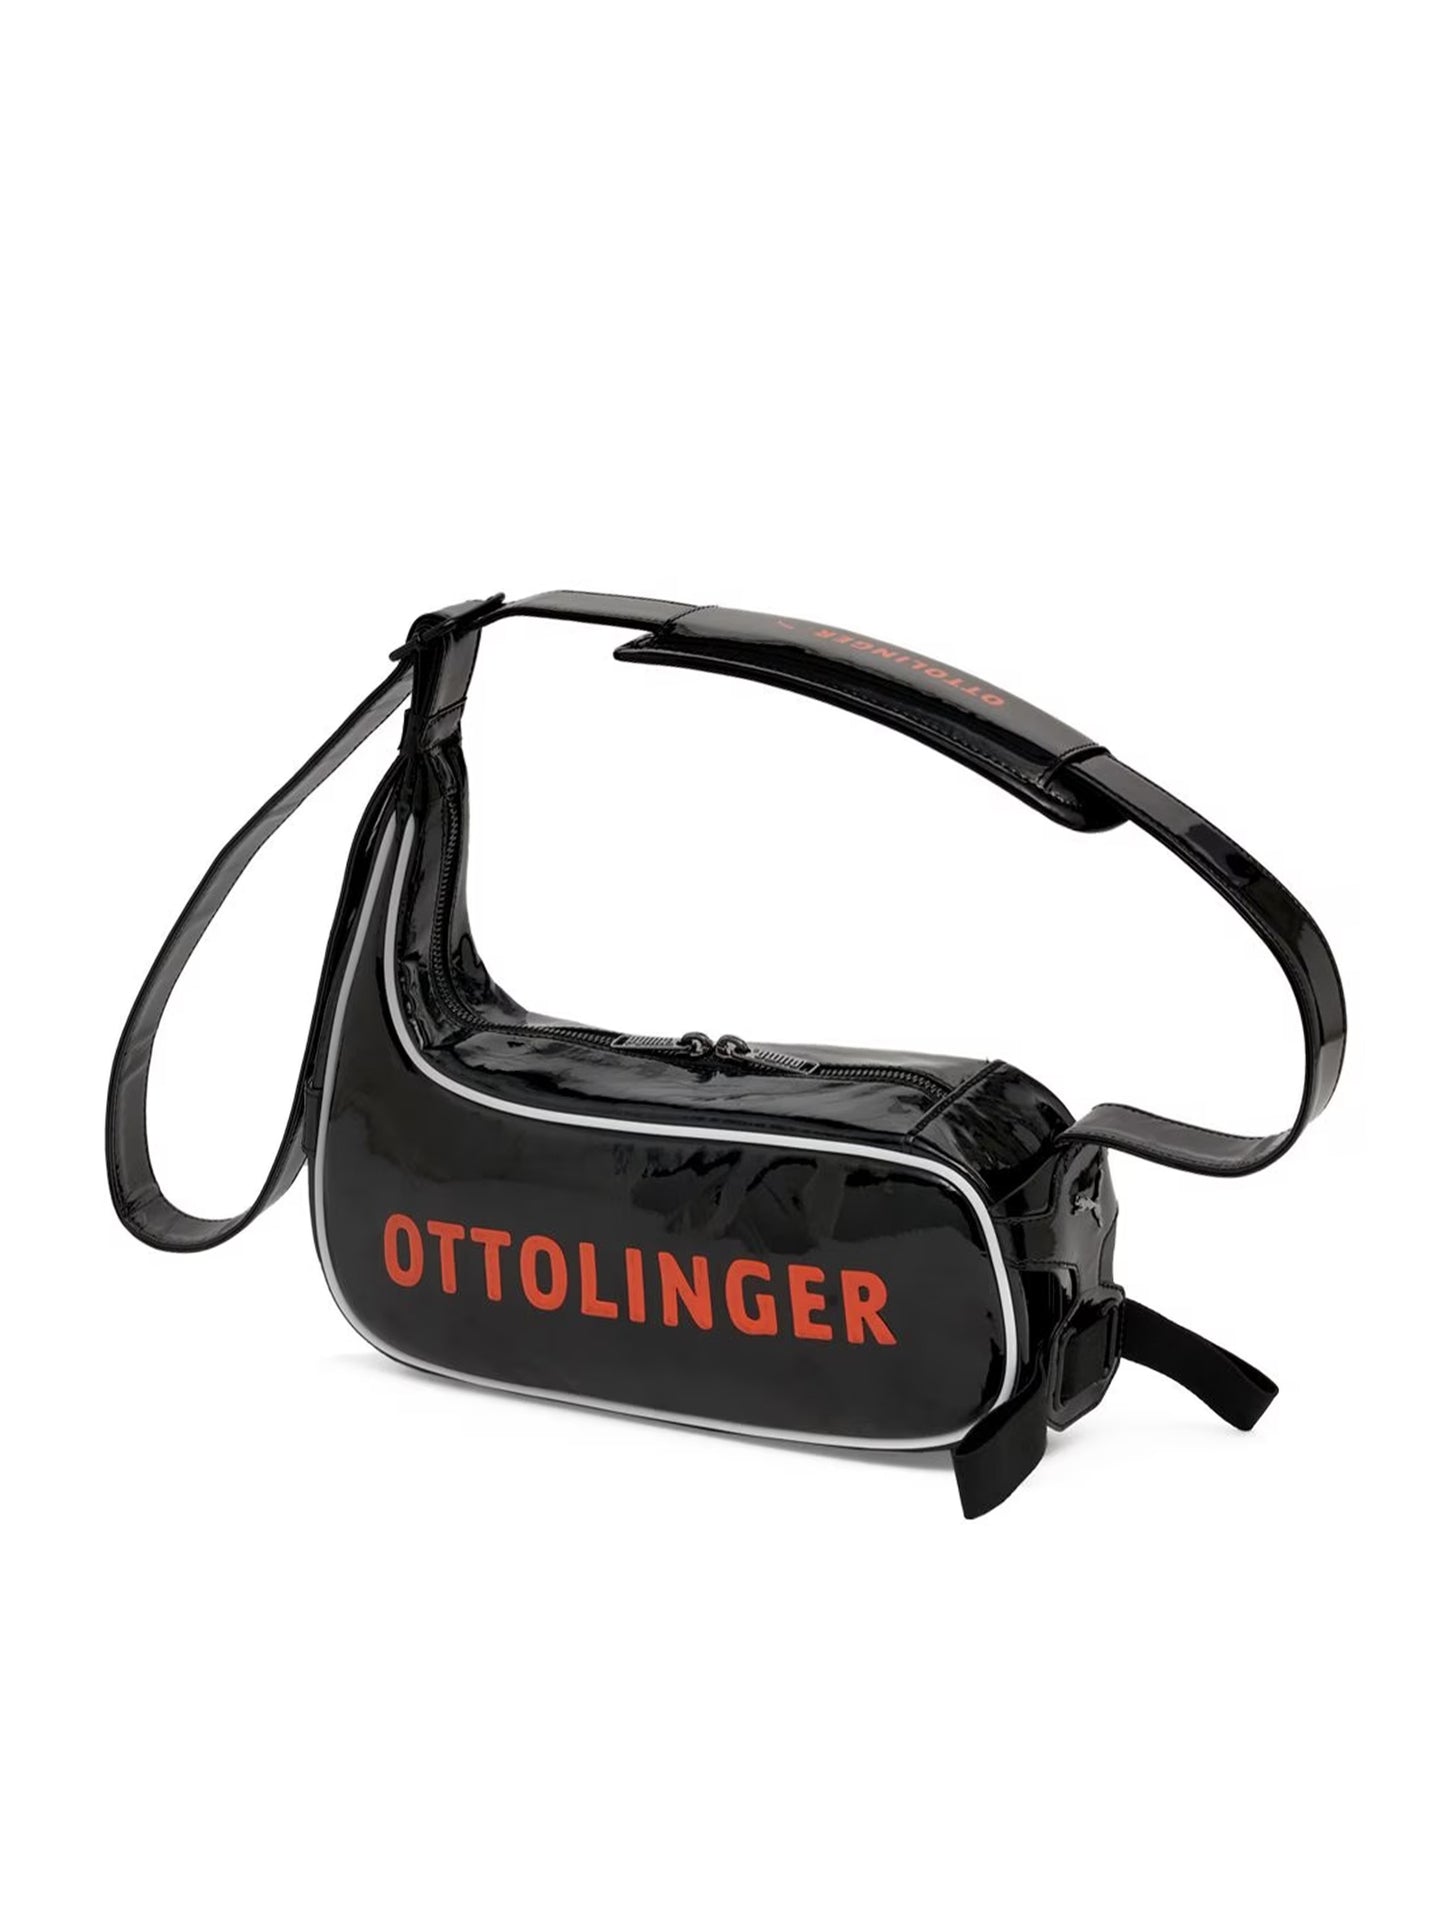 Ottolinger x Puma Black Bag